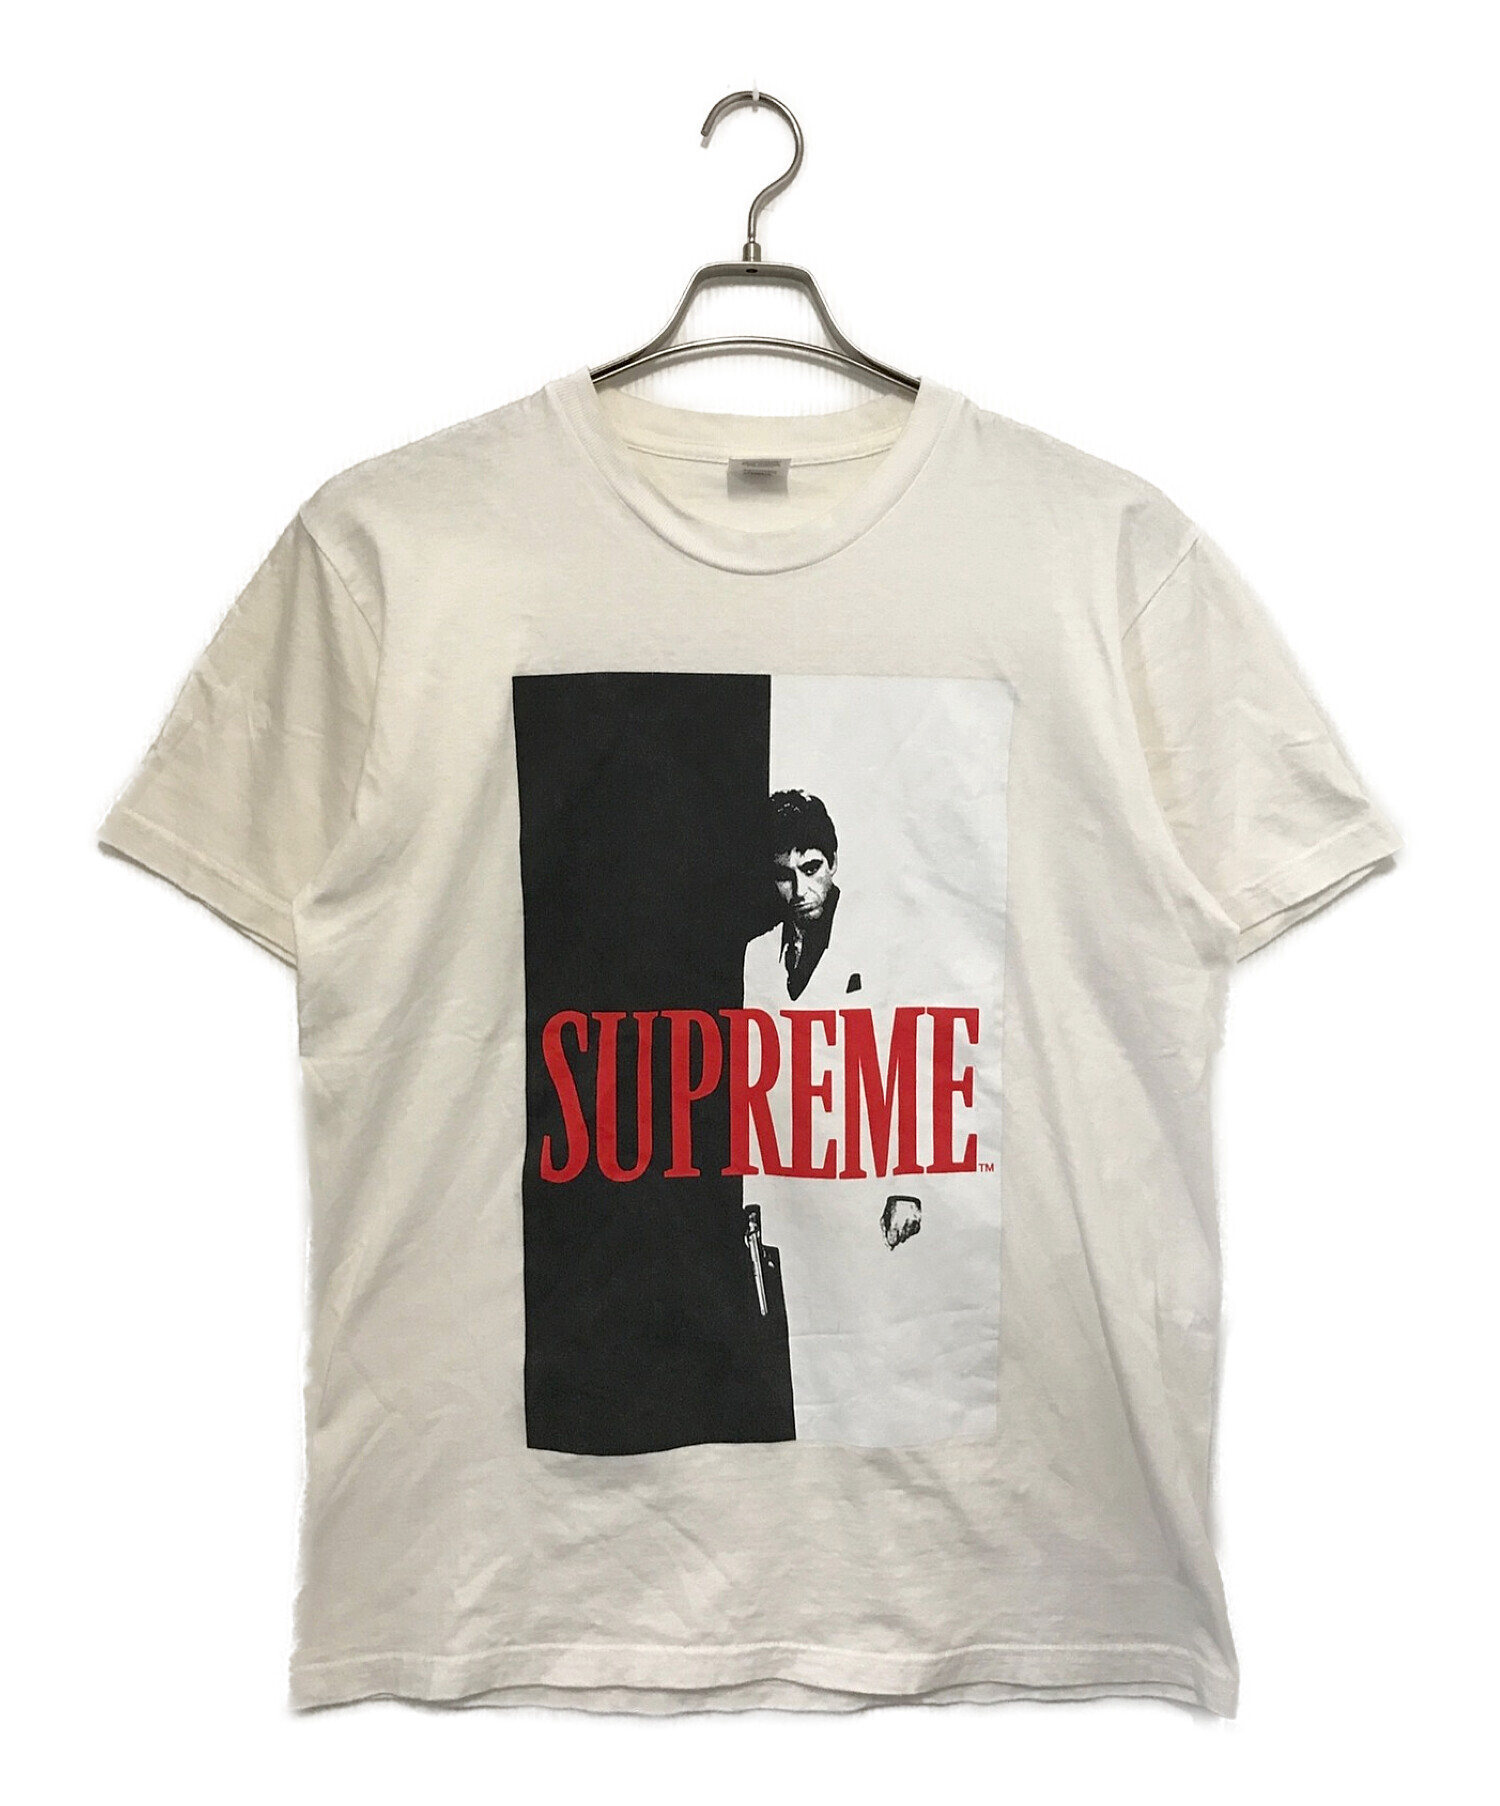 Supremeシュプリーム×スカーフェイスTシャツM www.krzysztofbialy.com